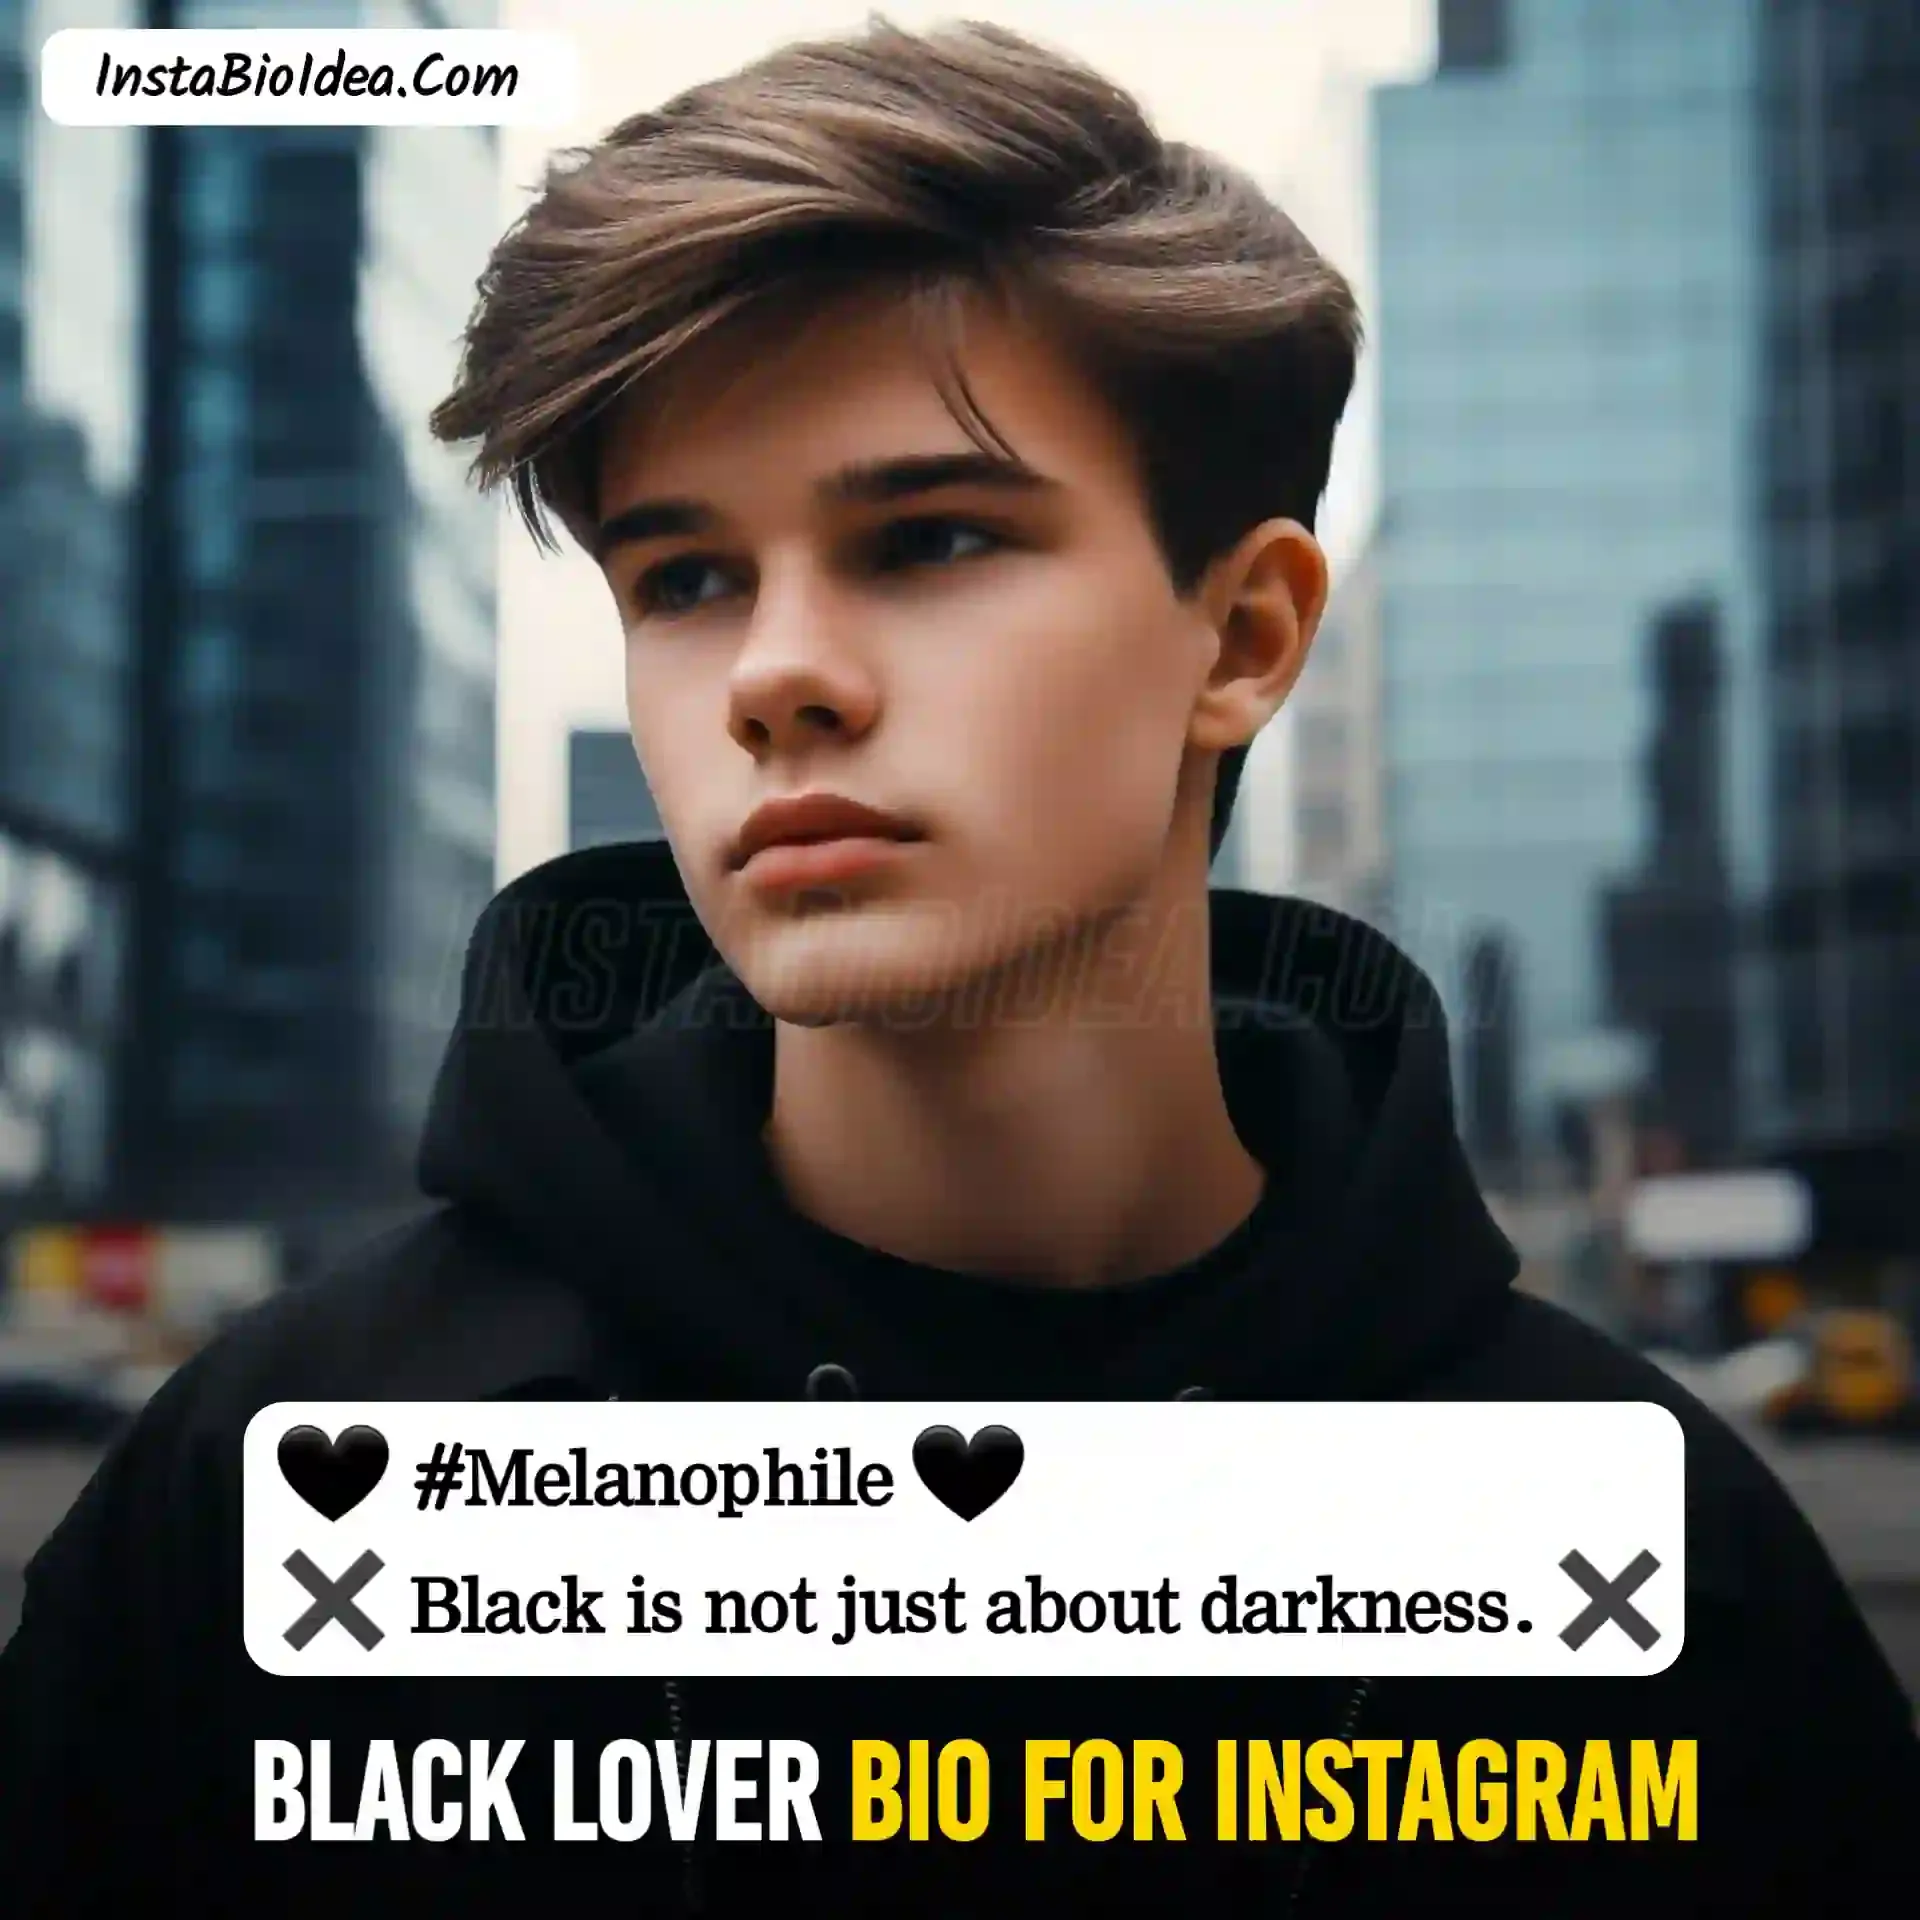 black lover bio for instagram image